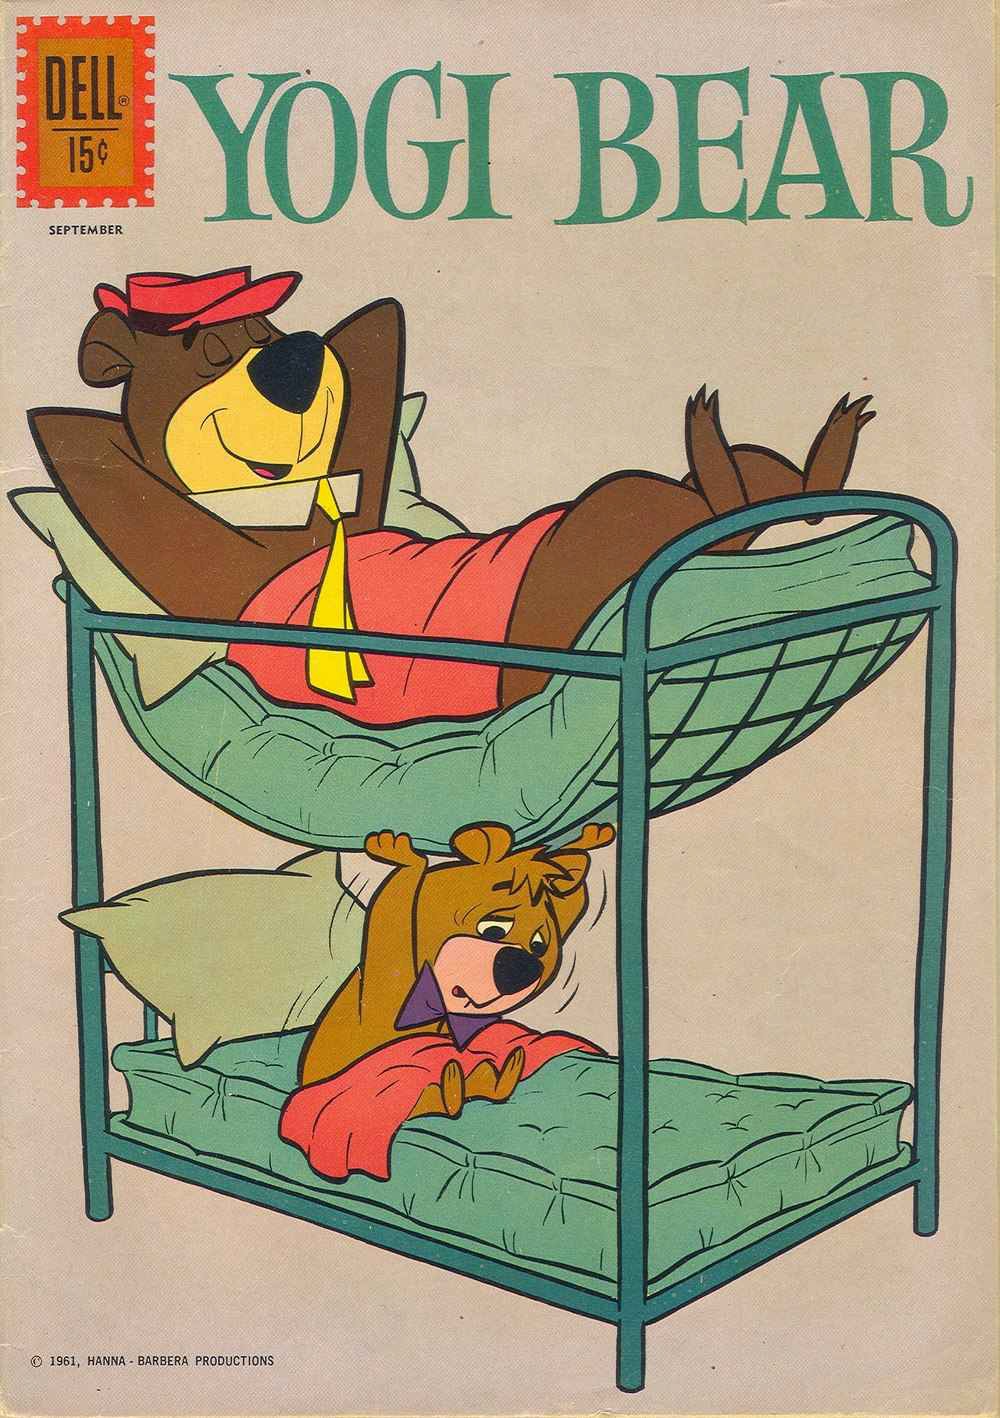 Super Bear Adventure – Lucky's Books and Comics